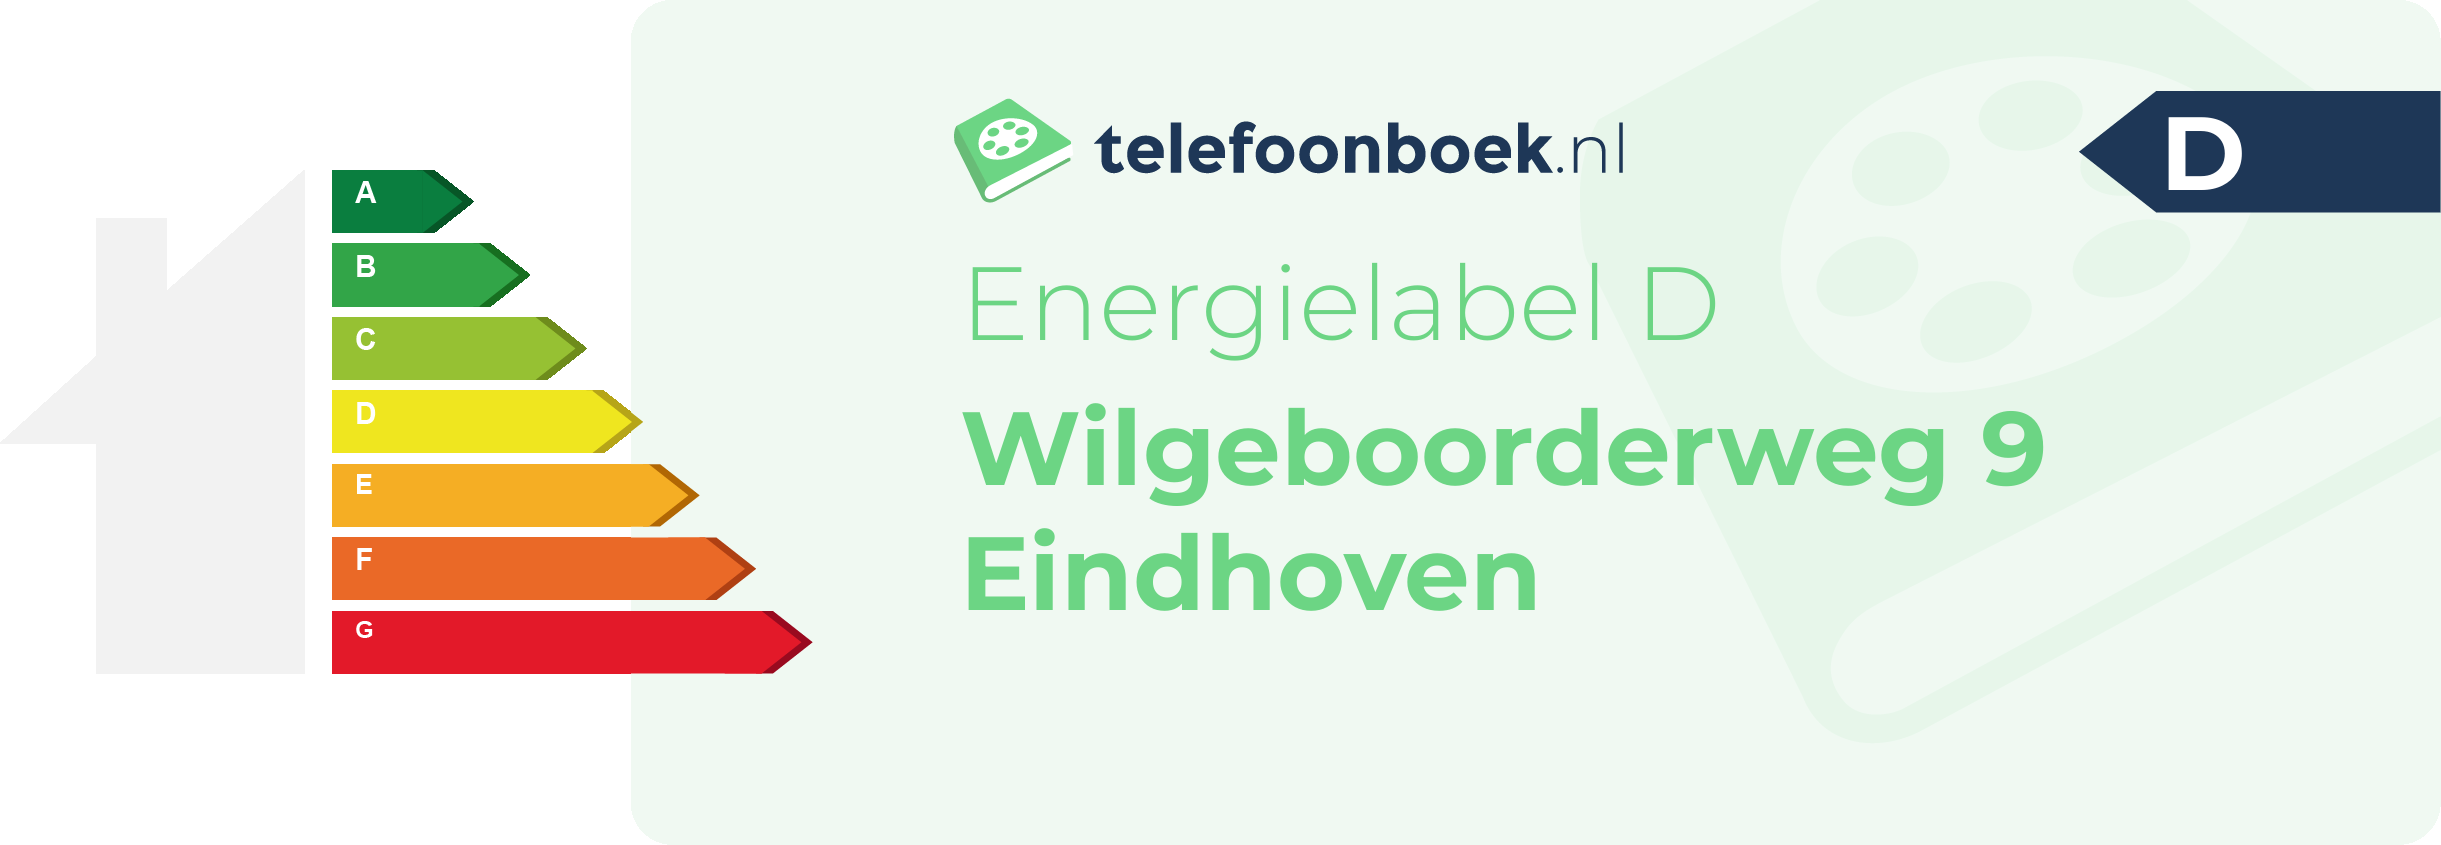 Energielabel Wilgeboorderweg 9 Eindhoven